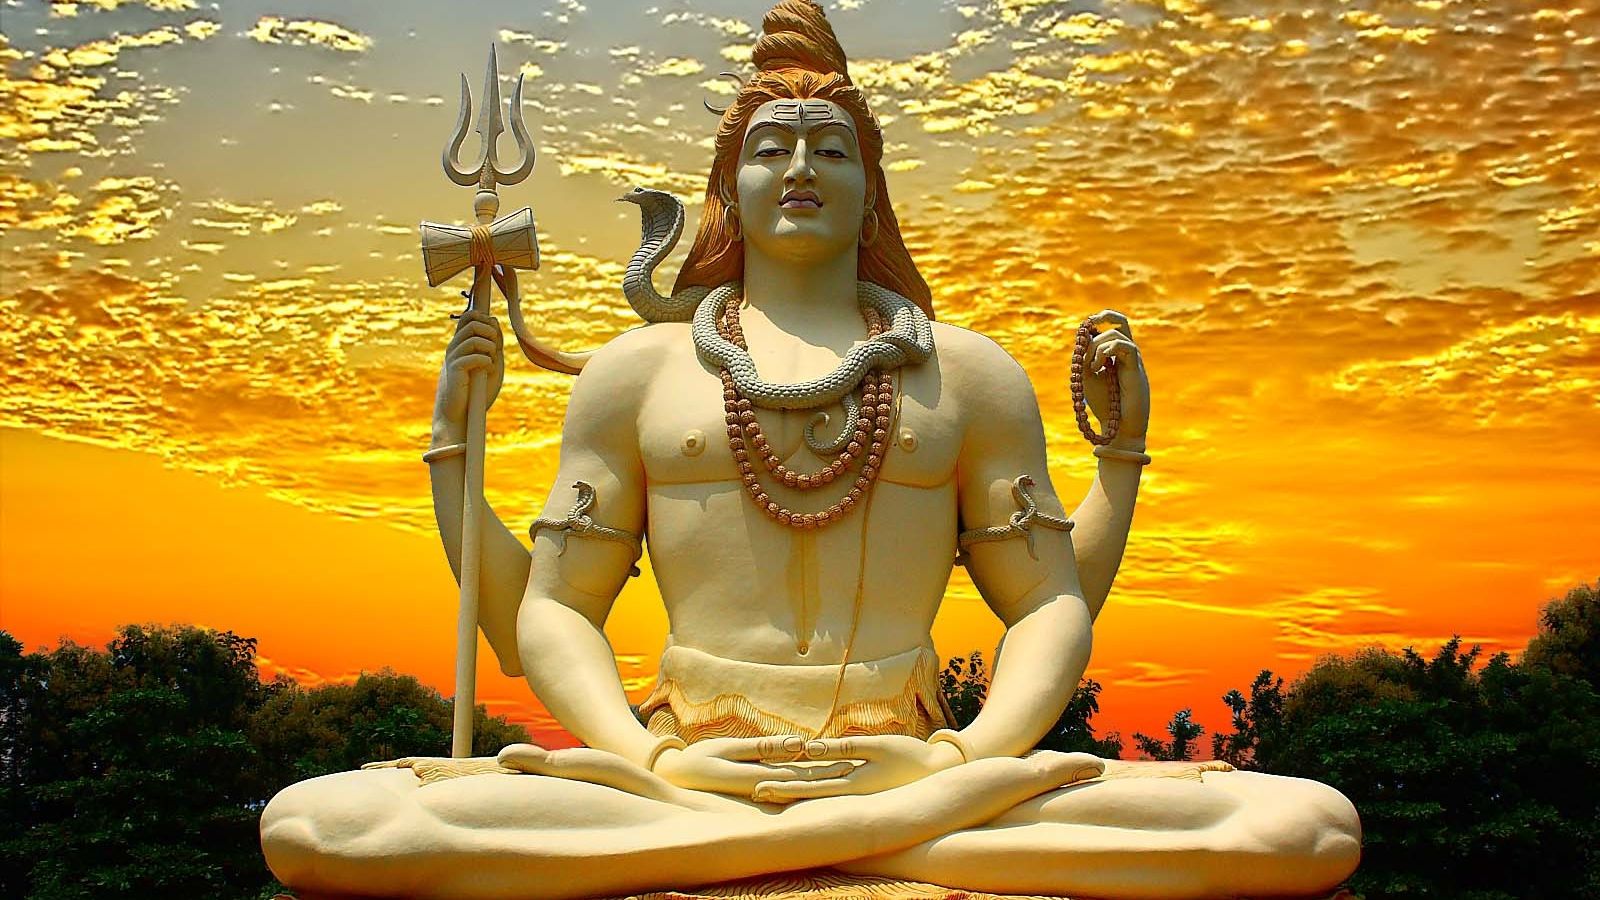 Free download Wallpaper Hindu God Shiva Wallpaper Lord Shiva